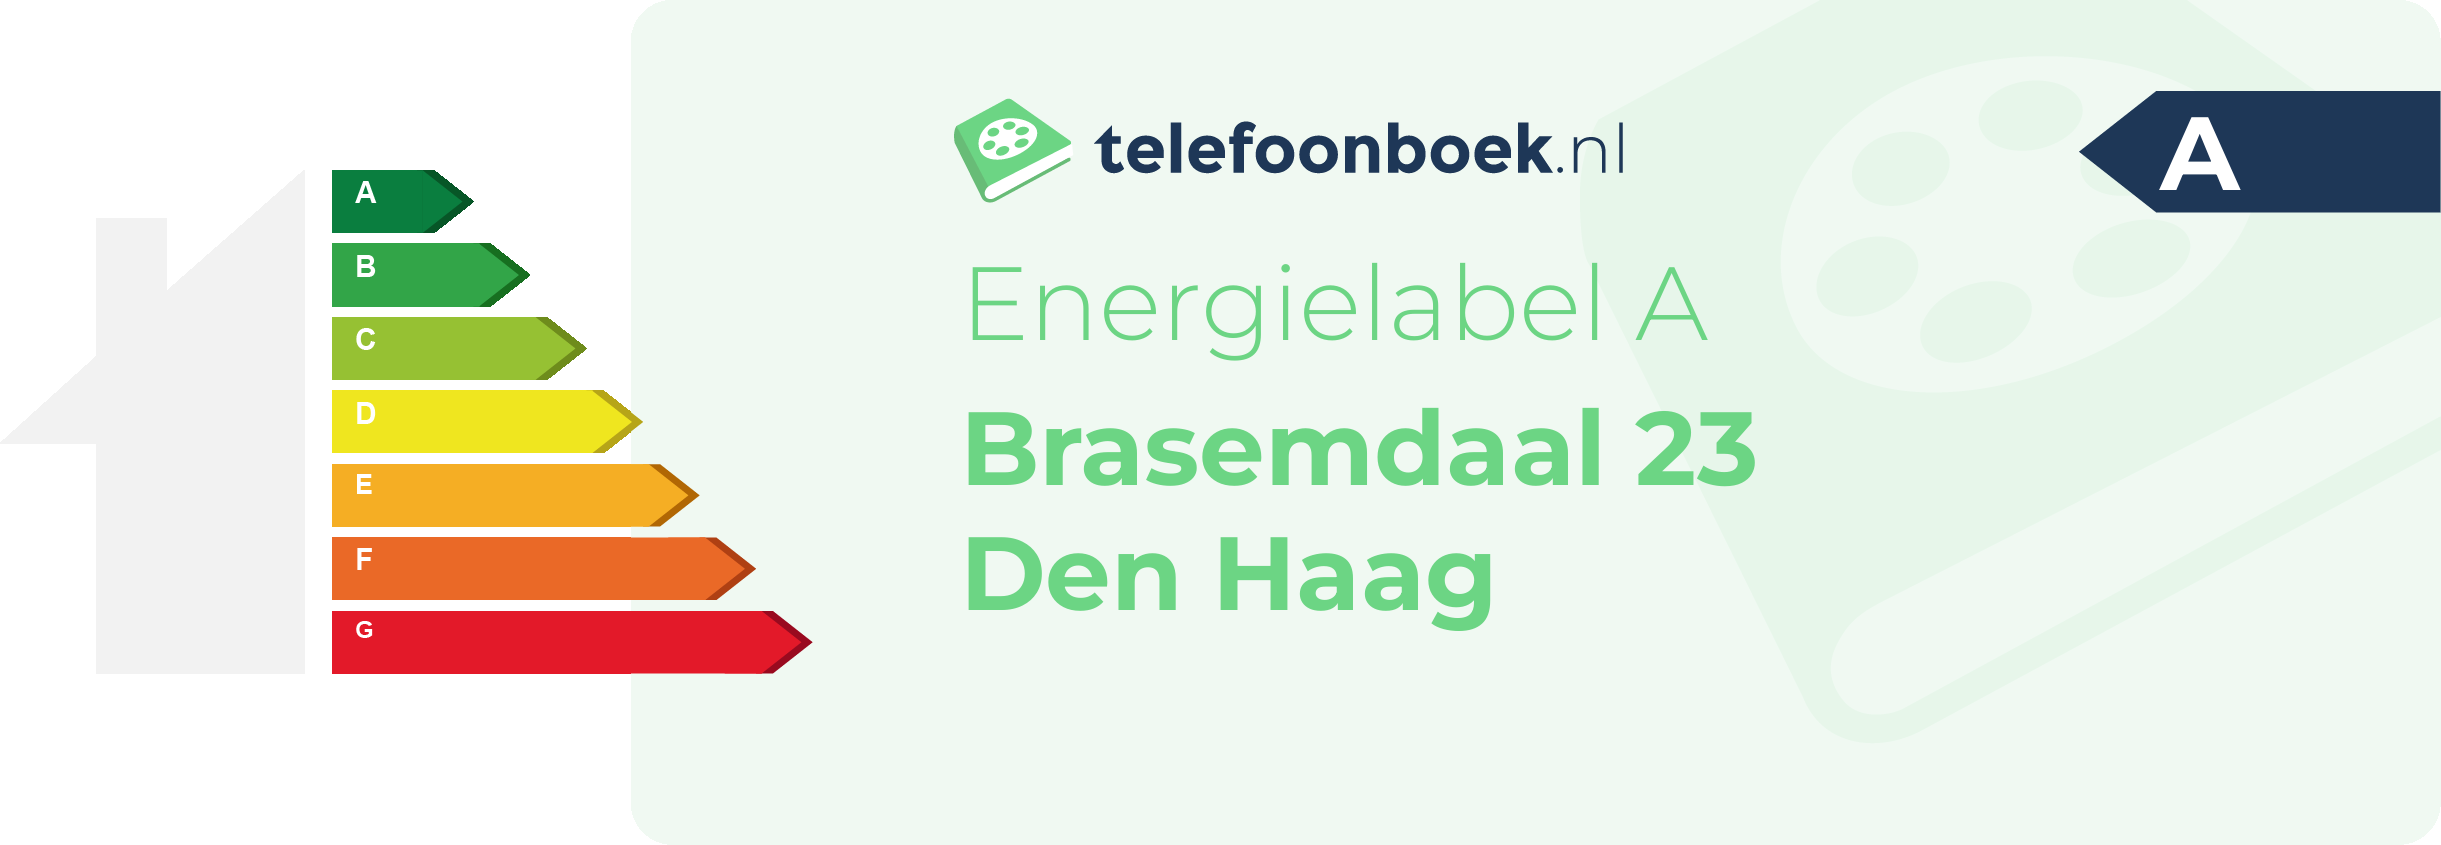 Energielabel Brasemdaal 23 Den Haag